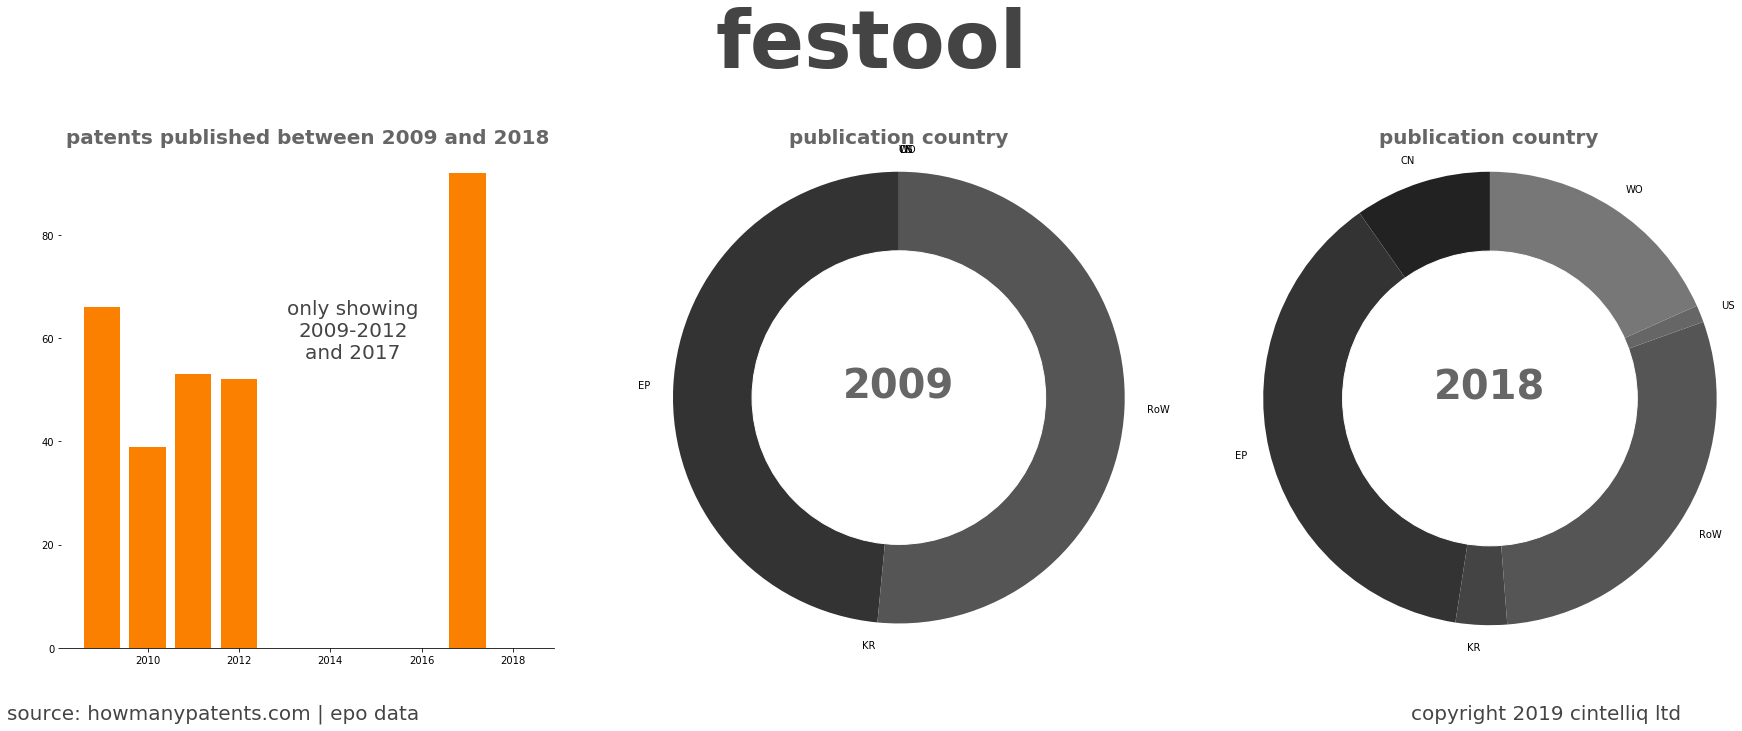 summary of patents for Festool